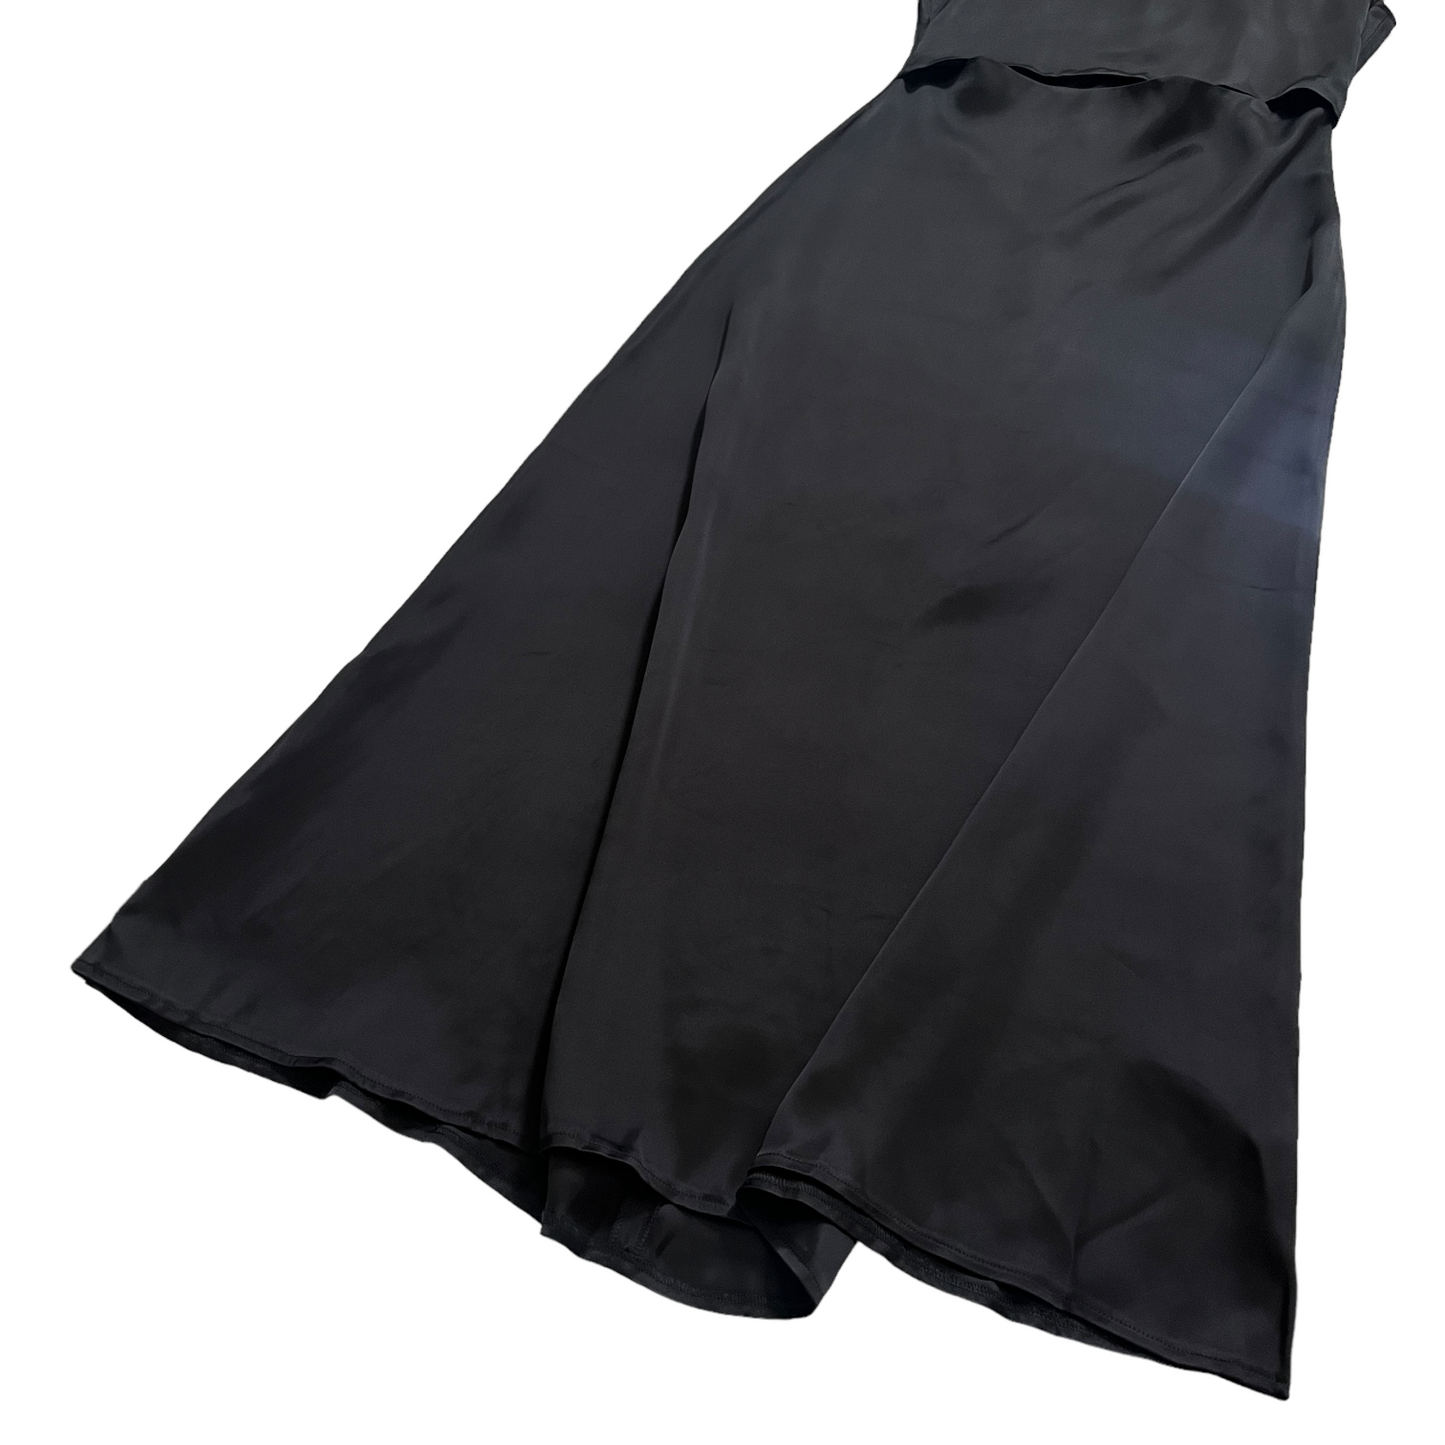 Loulou Studio Copan Cut Out Sleeveless Dress in Black